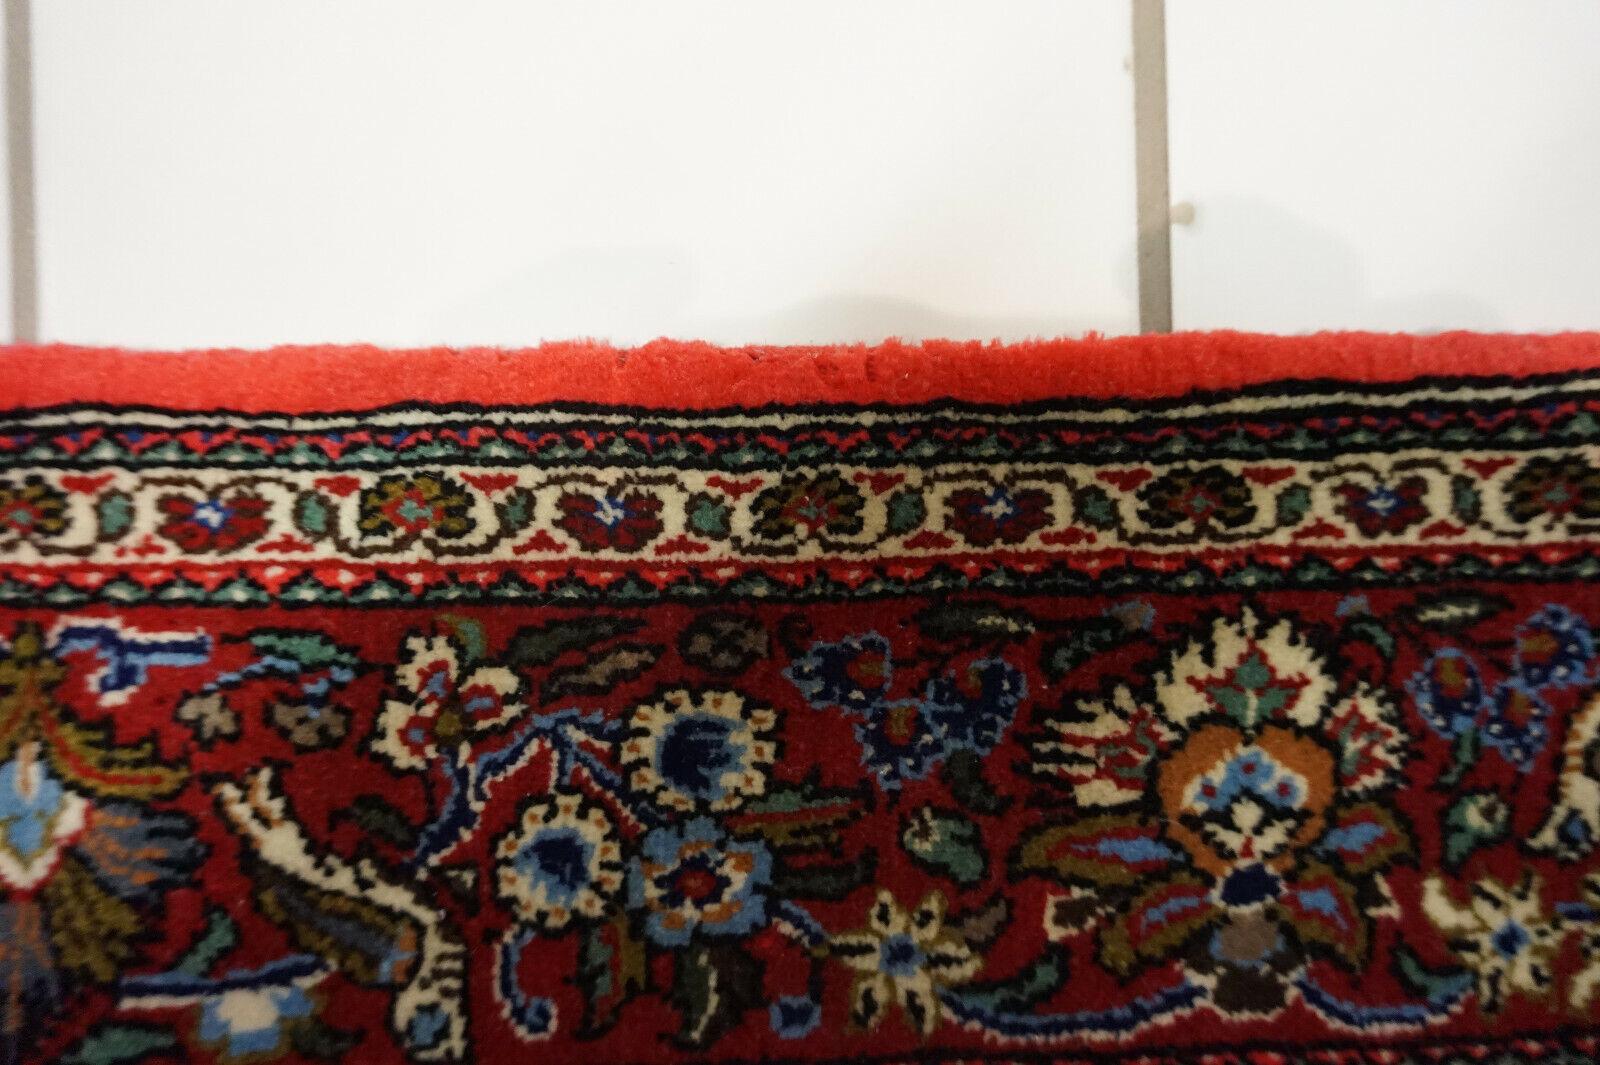 Handmade Vintage Persian Style Qum Prayer Rug 3.4' x 5.4', 1970s - 1D49 For Sale 4